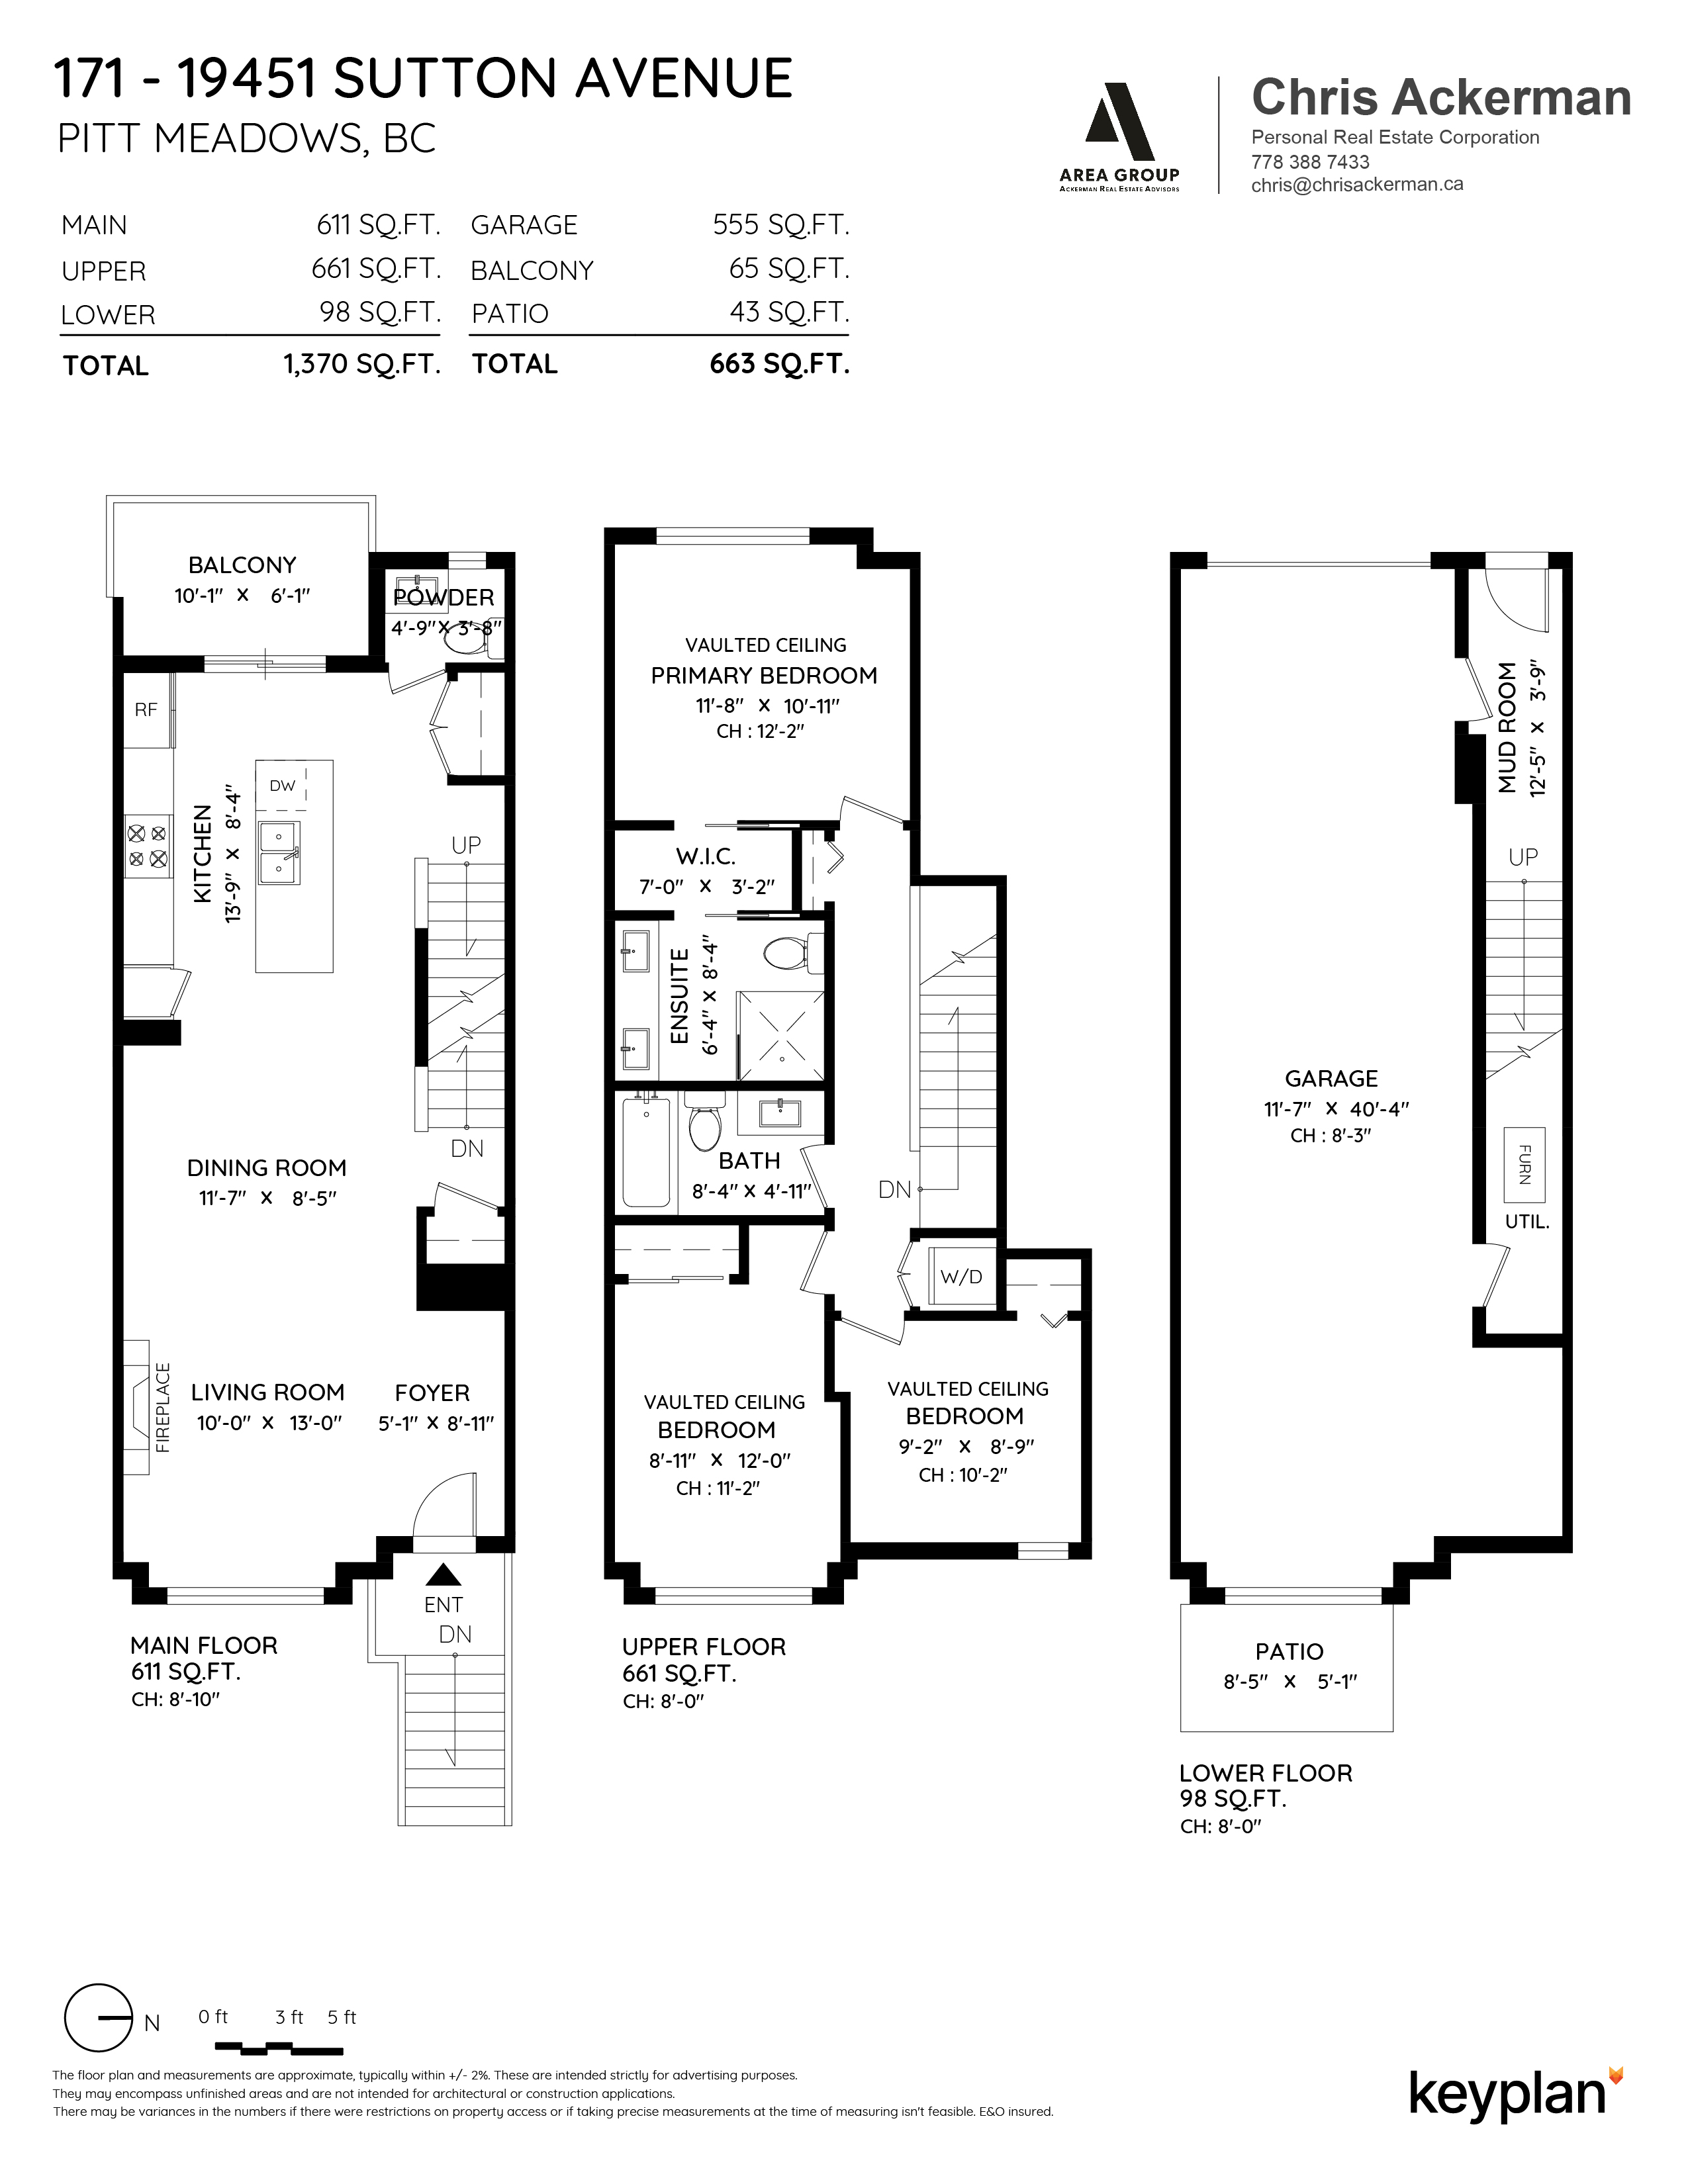 Chris Ackerman - Unit 171 - 19451 Sutton Avenue, Pitt Meadows, BC, Canada | Floor Plan 1